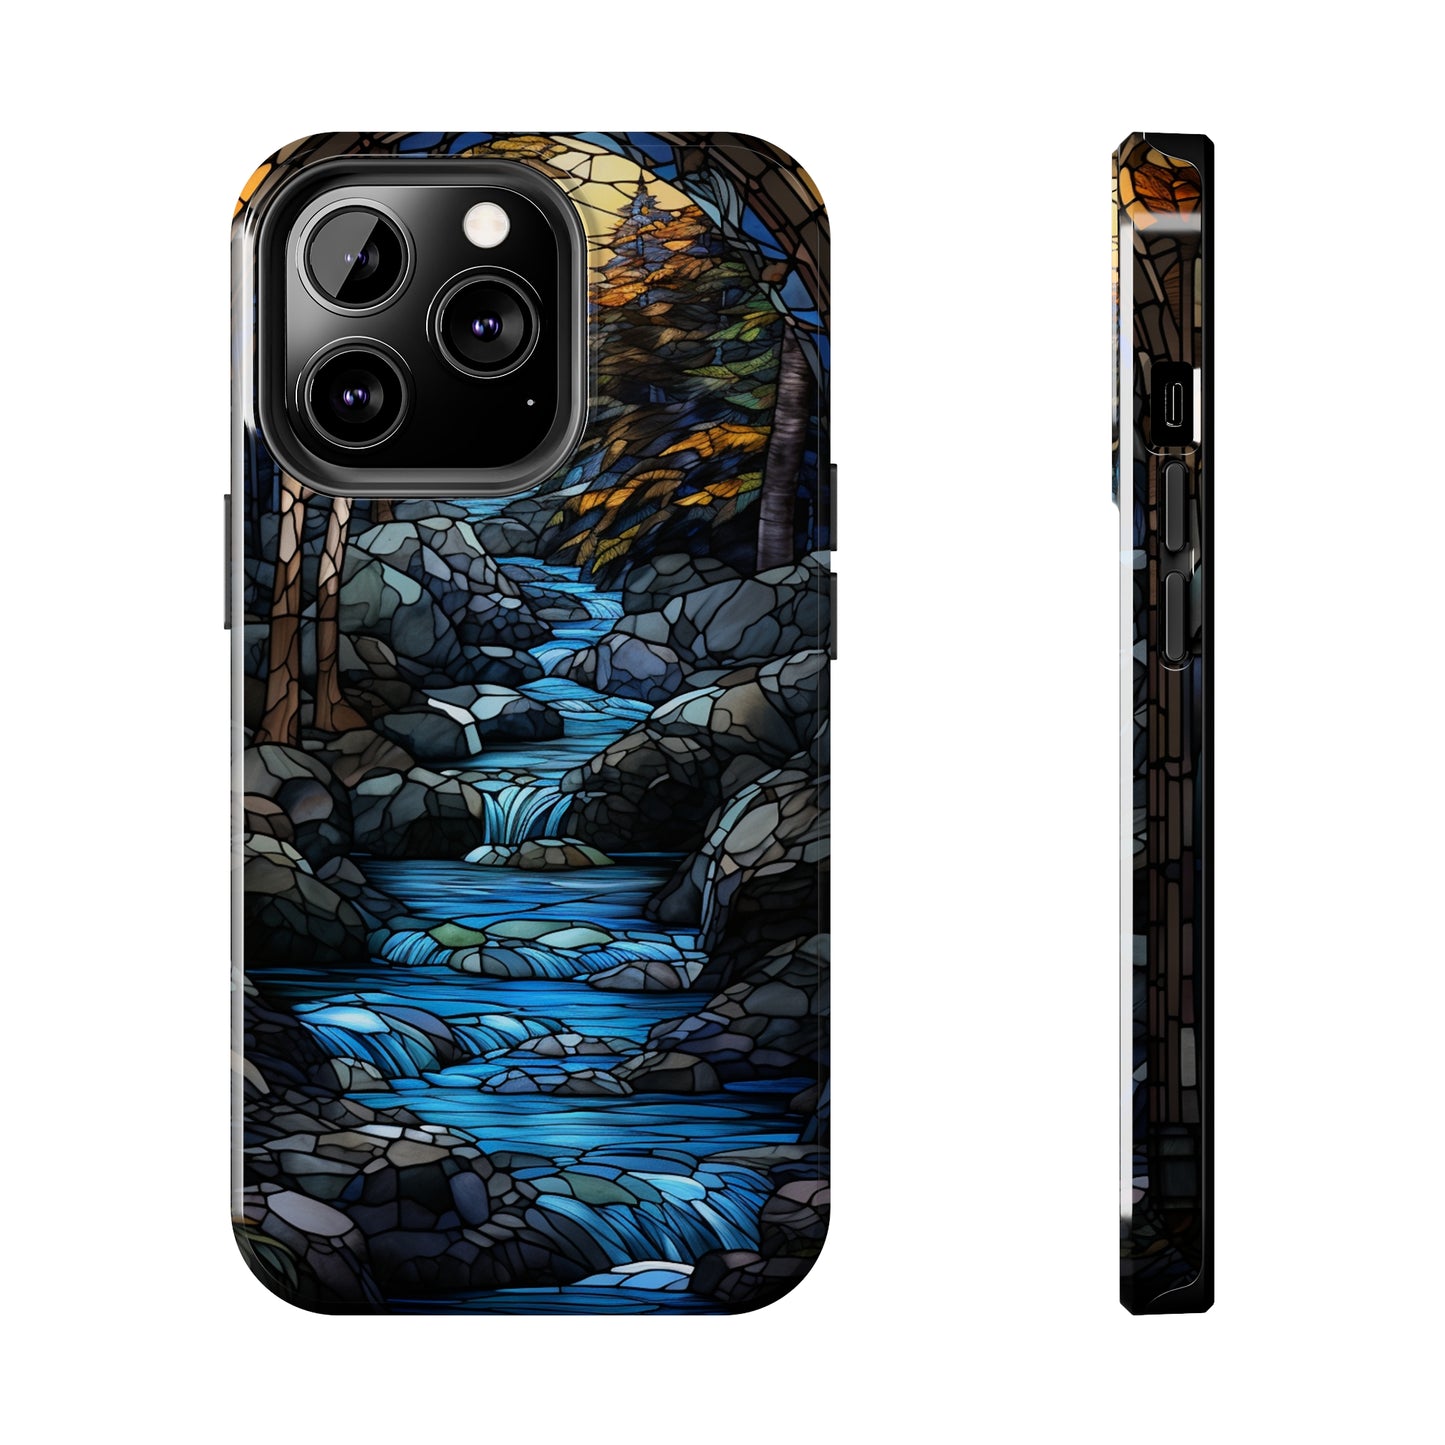 Bohemian iPhone 12 case with stone bridge